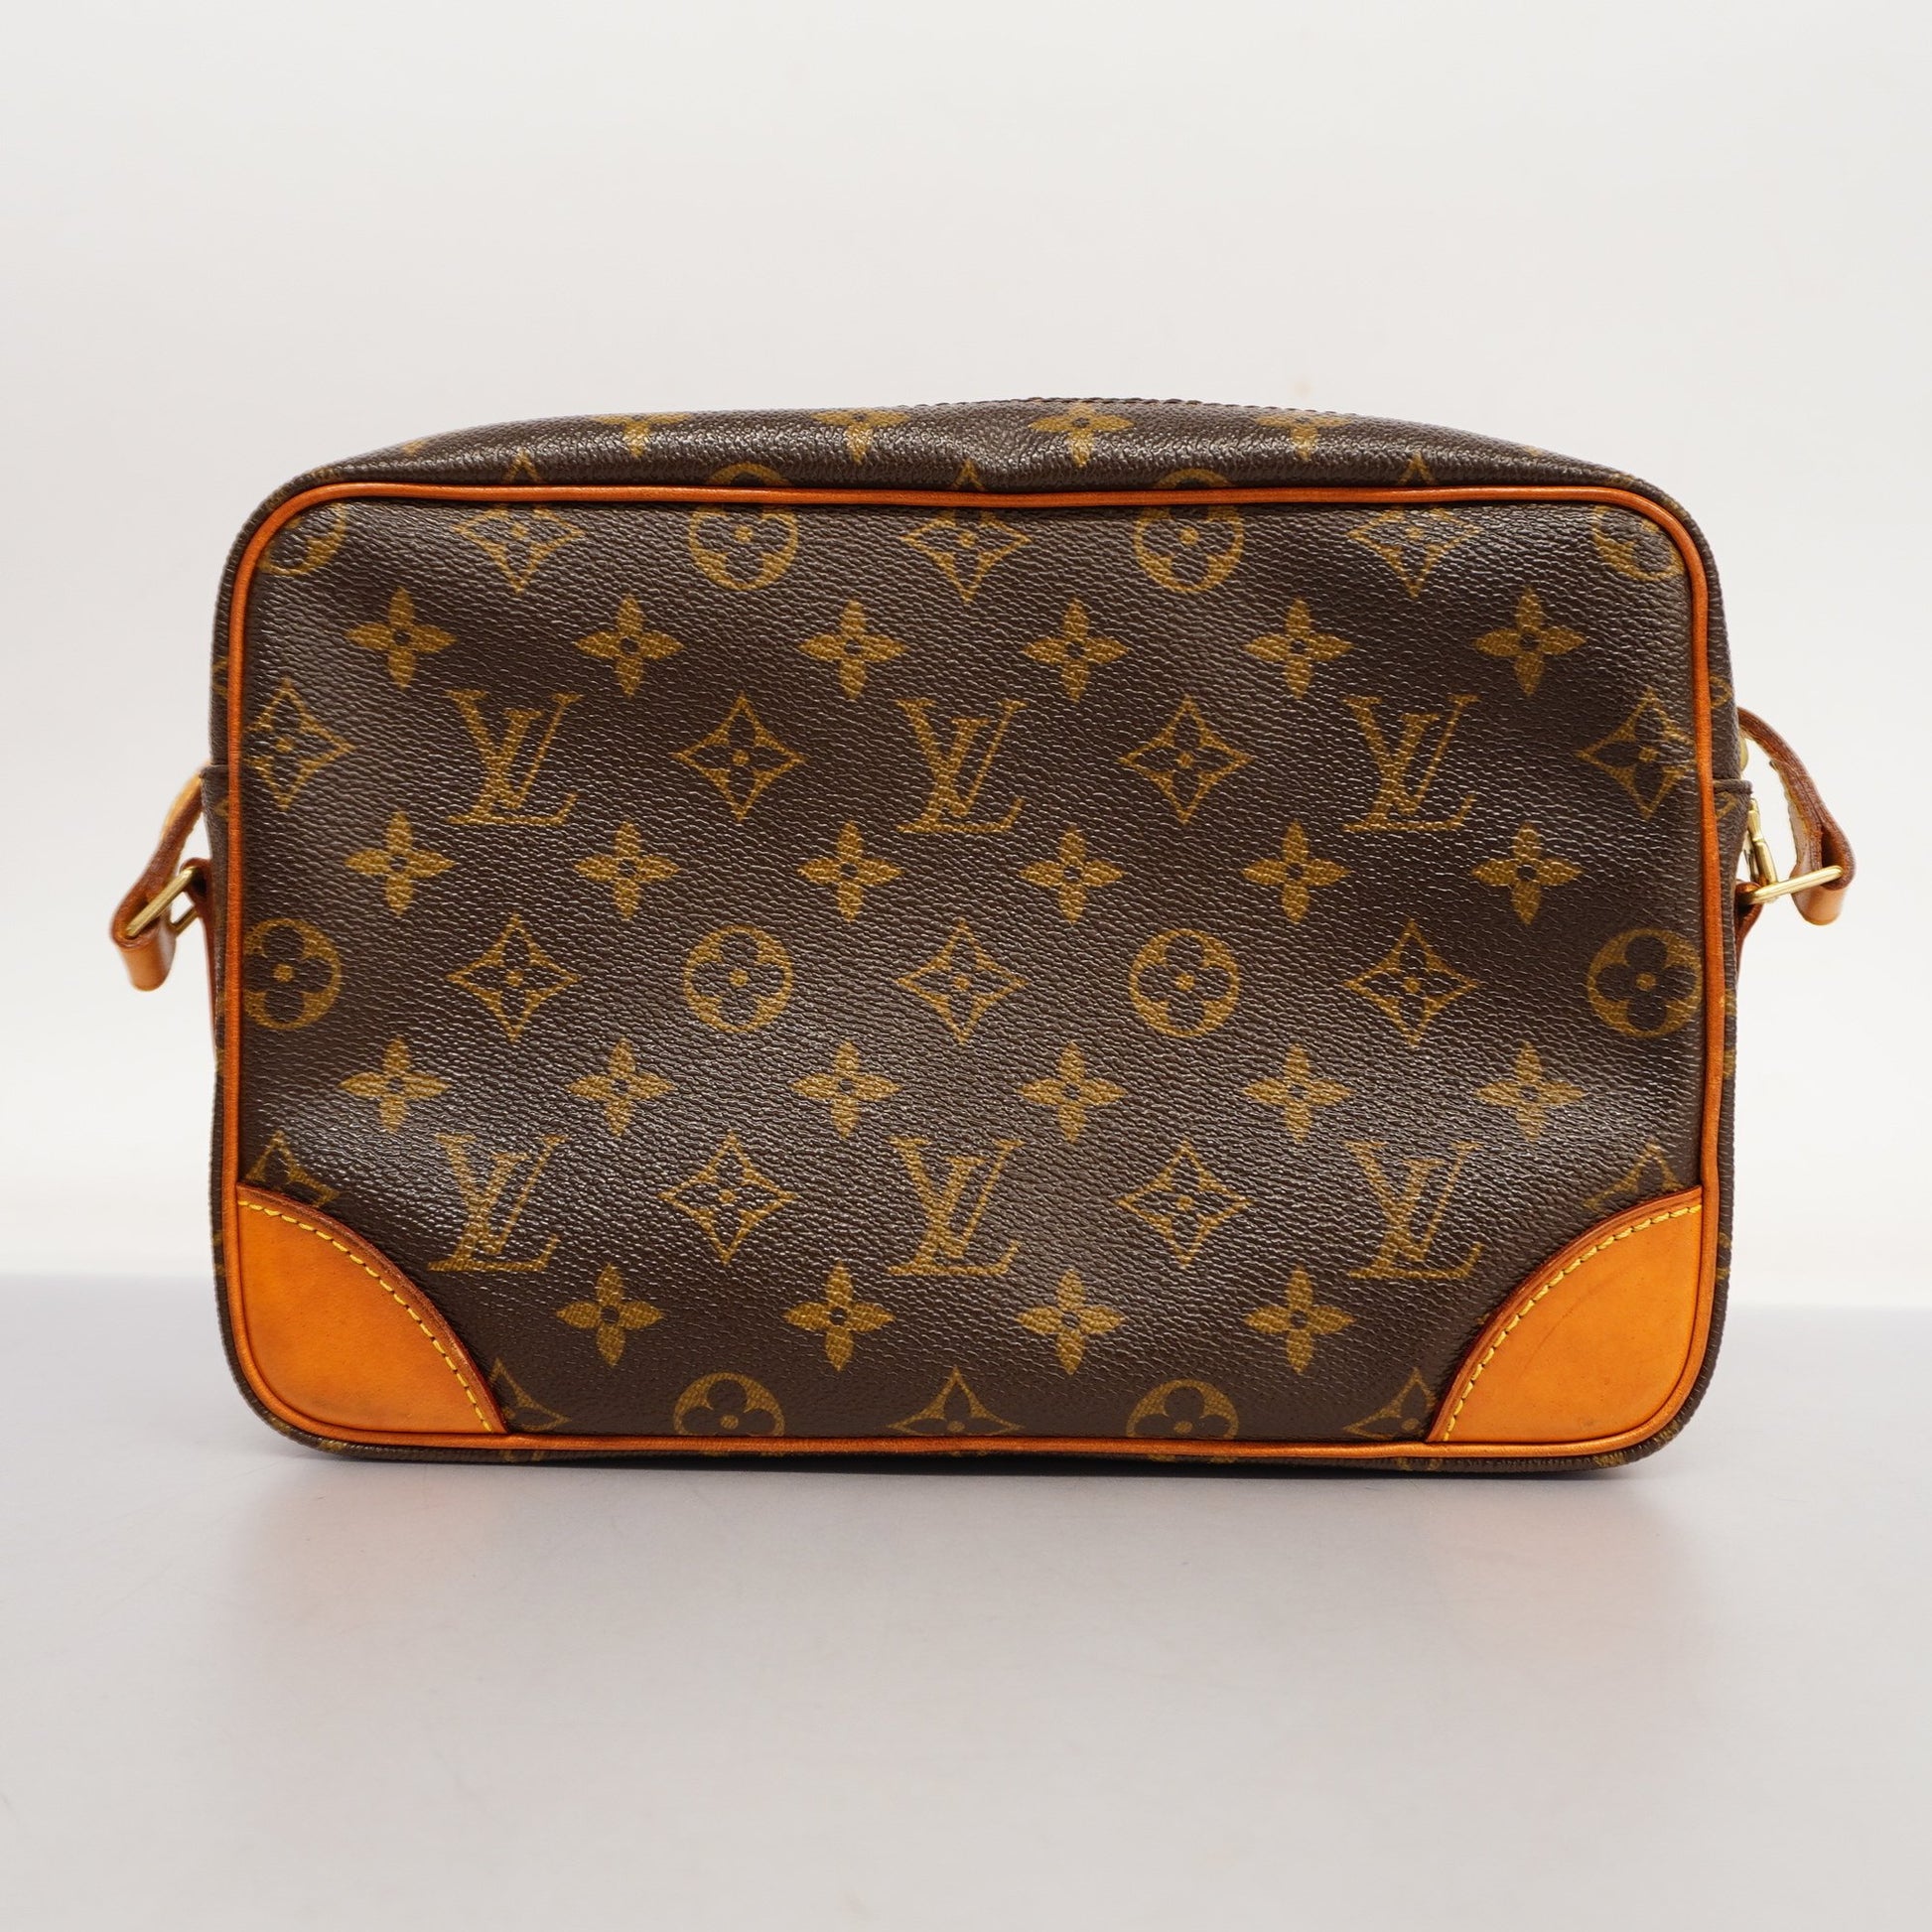 Louis Vuitton Monogram Trocadero 27 M51274 Crossbody Bag Free Shipping [Used]